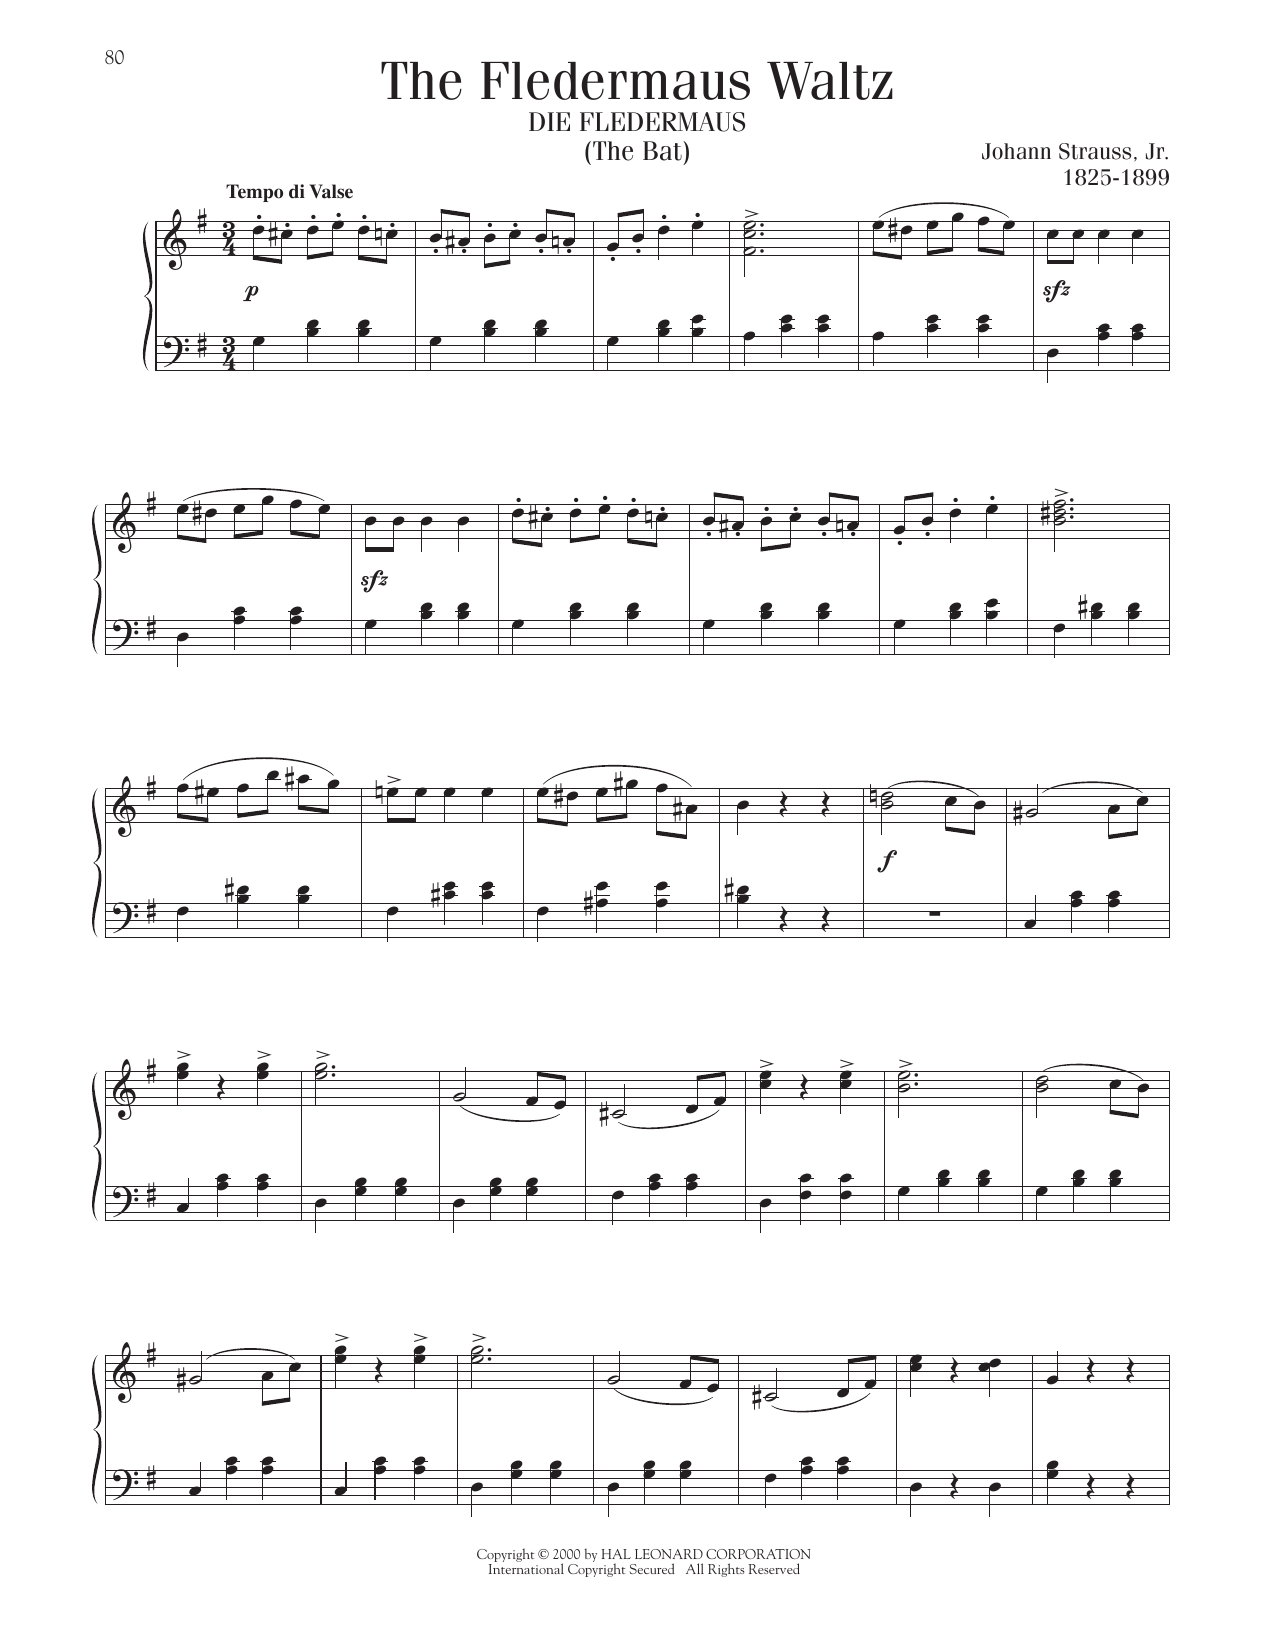 Johann Strauss, Jr. The Fledermaus Waltz sheet music notes printable PDF score